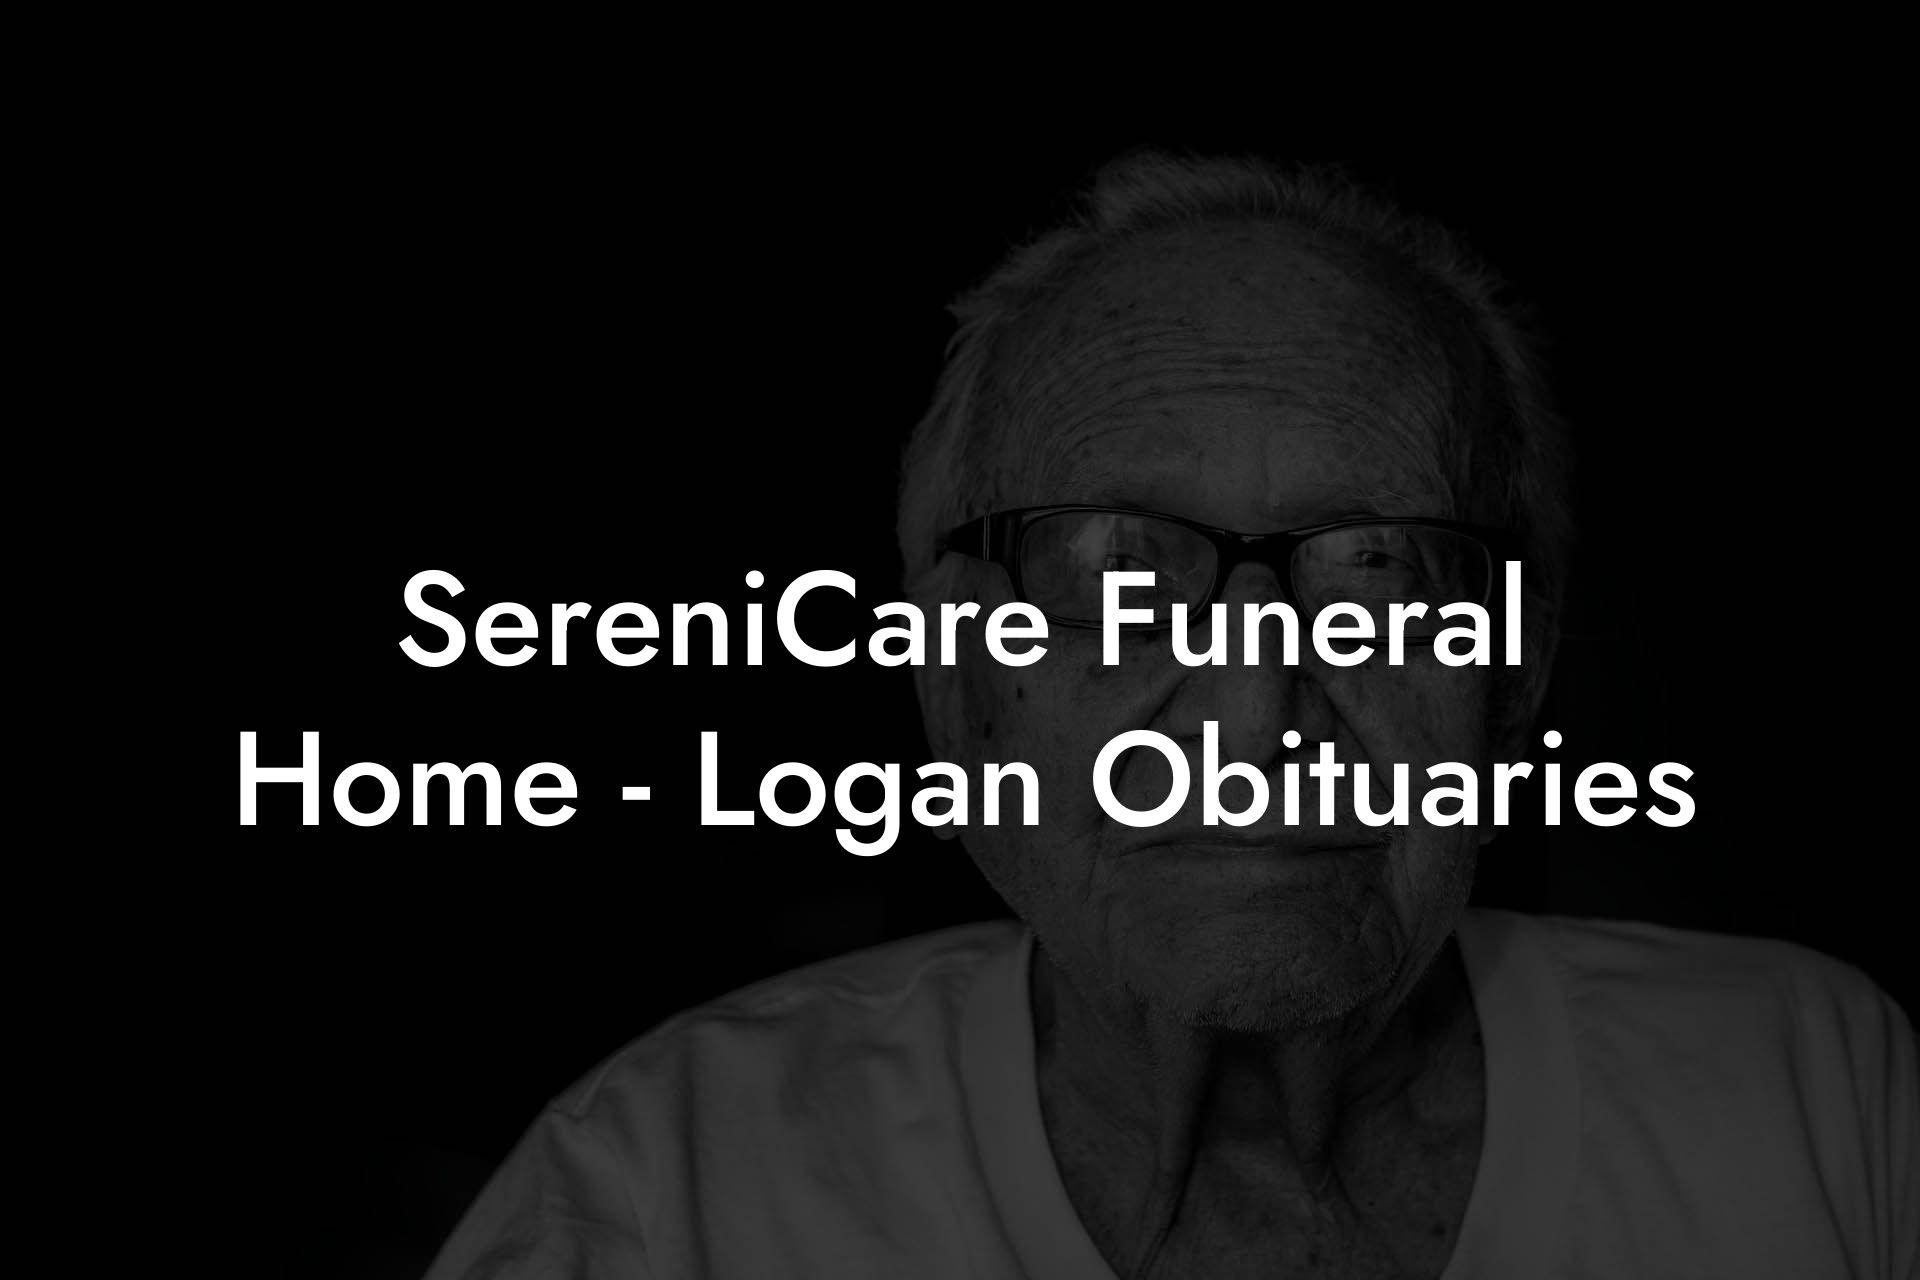 SereniCare Funeral Home - Logan Obituaries